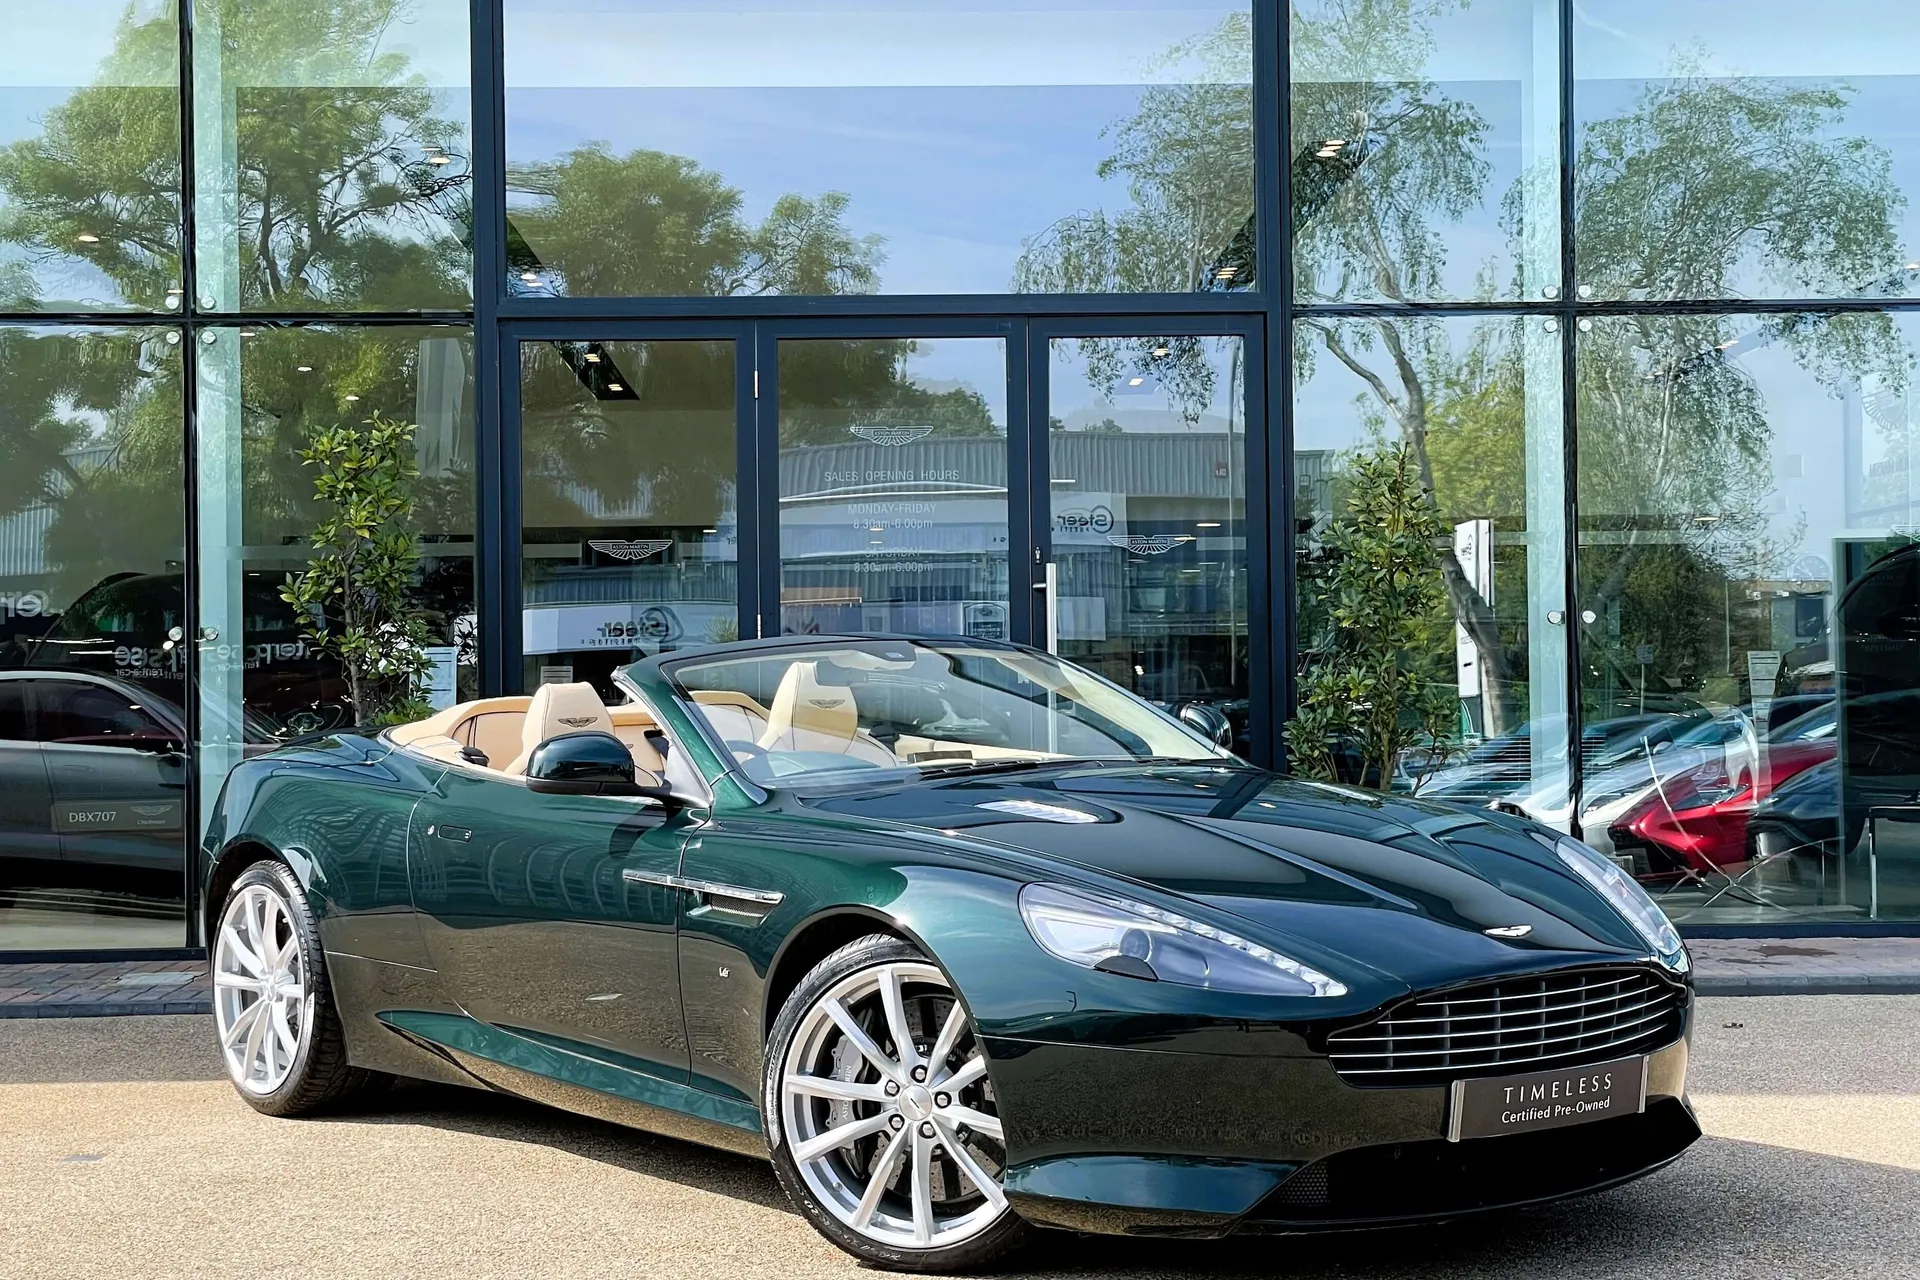 Aston Martin DB9 focused image